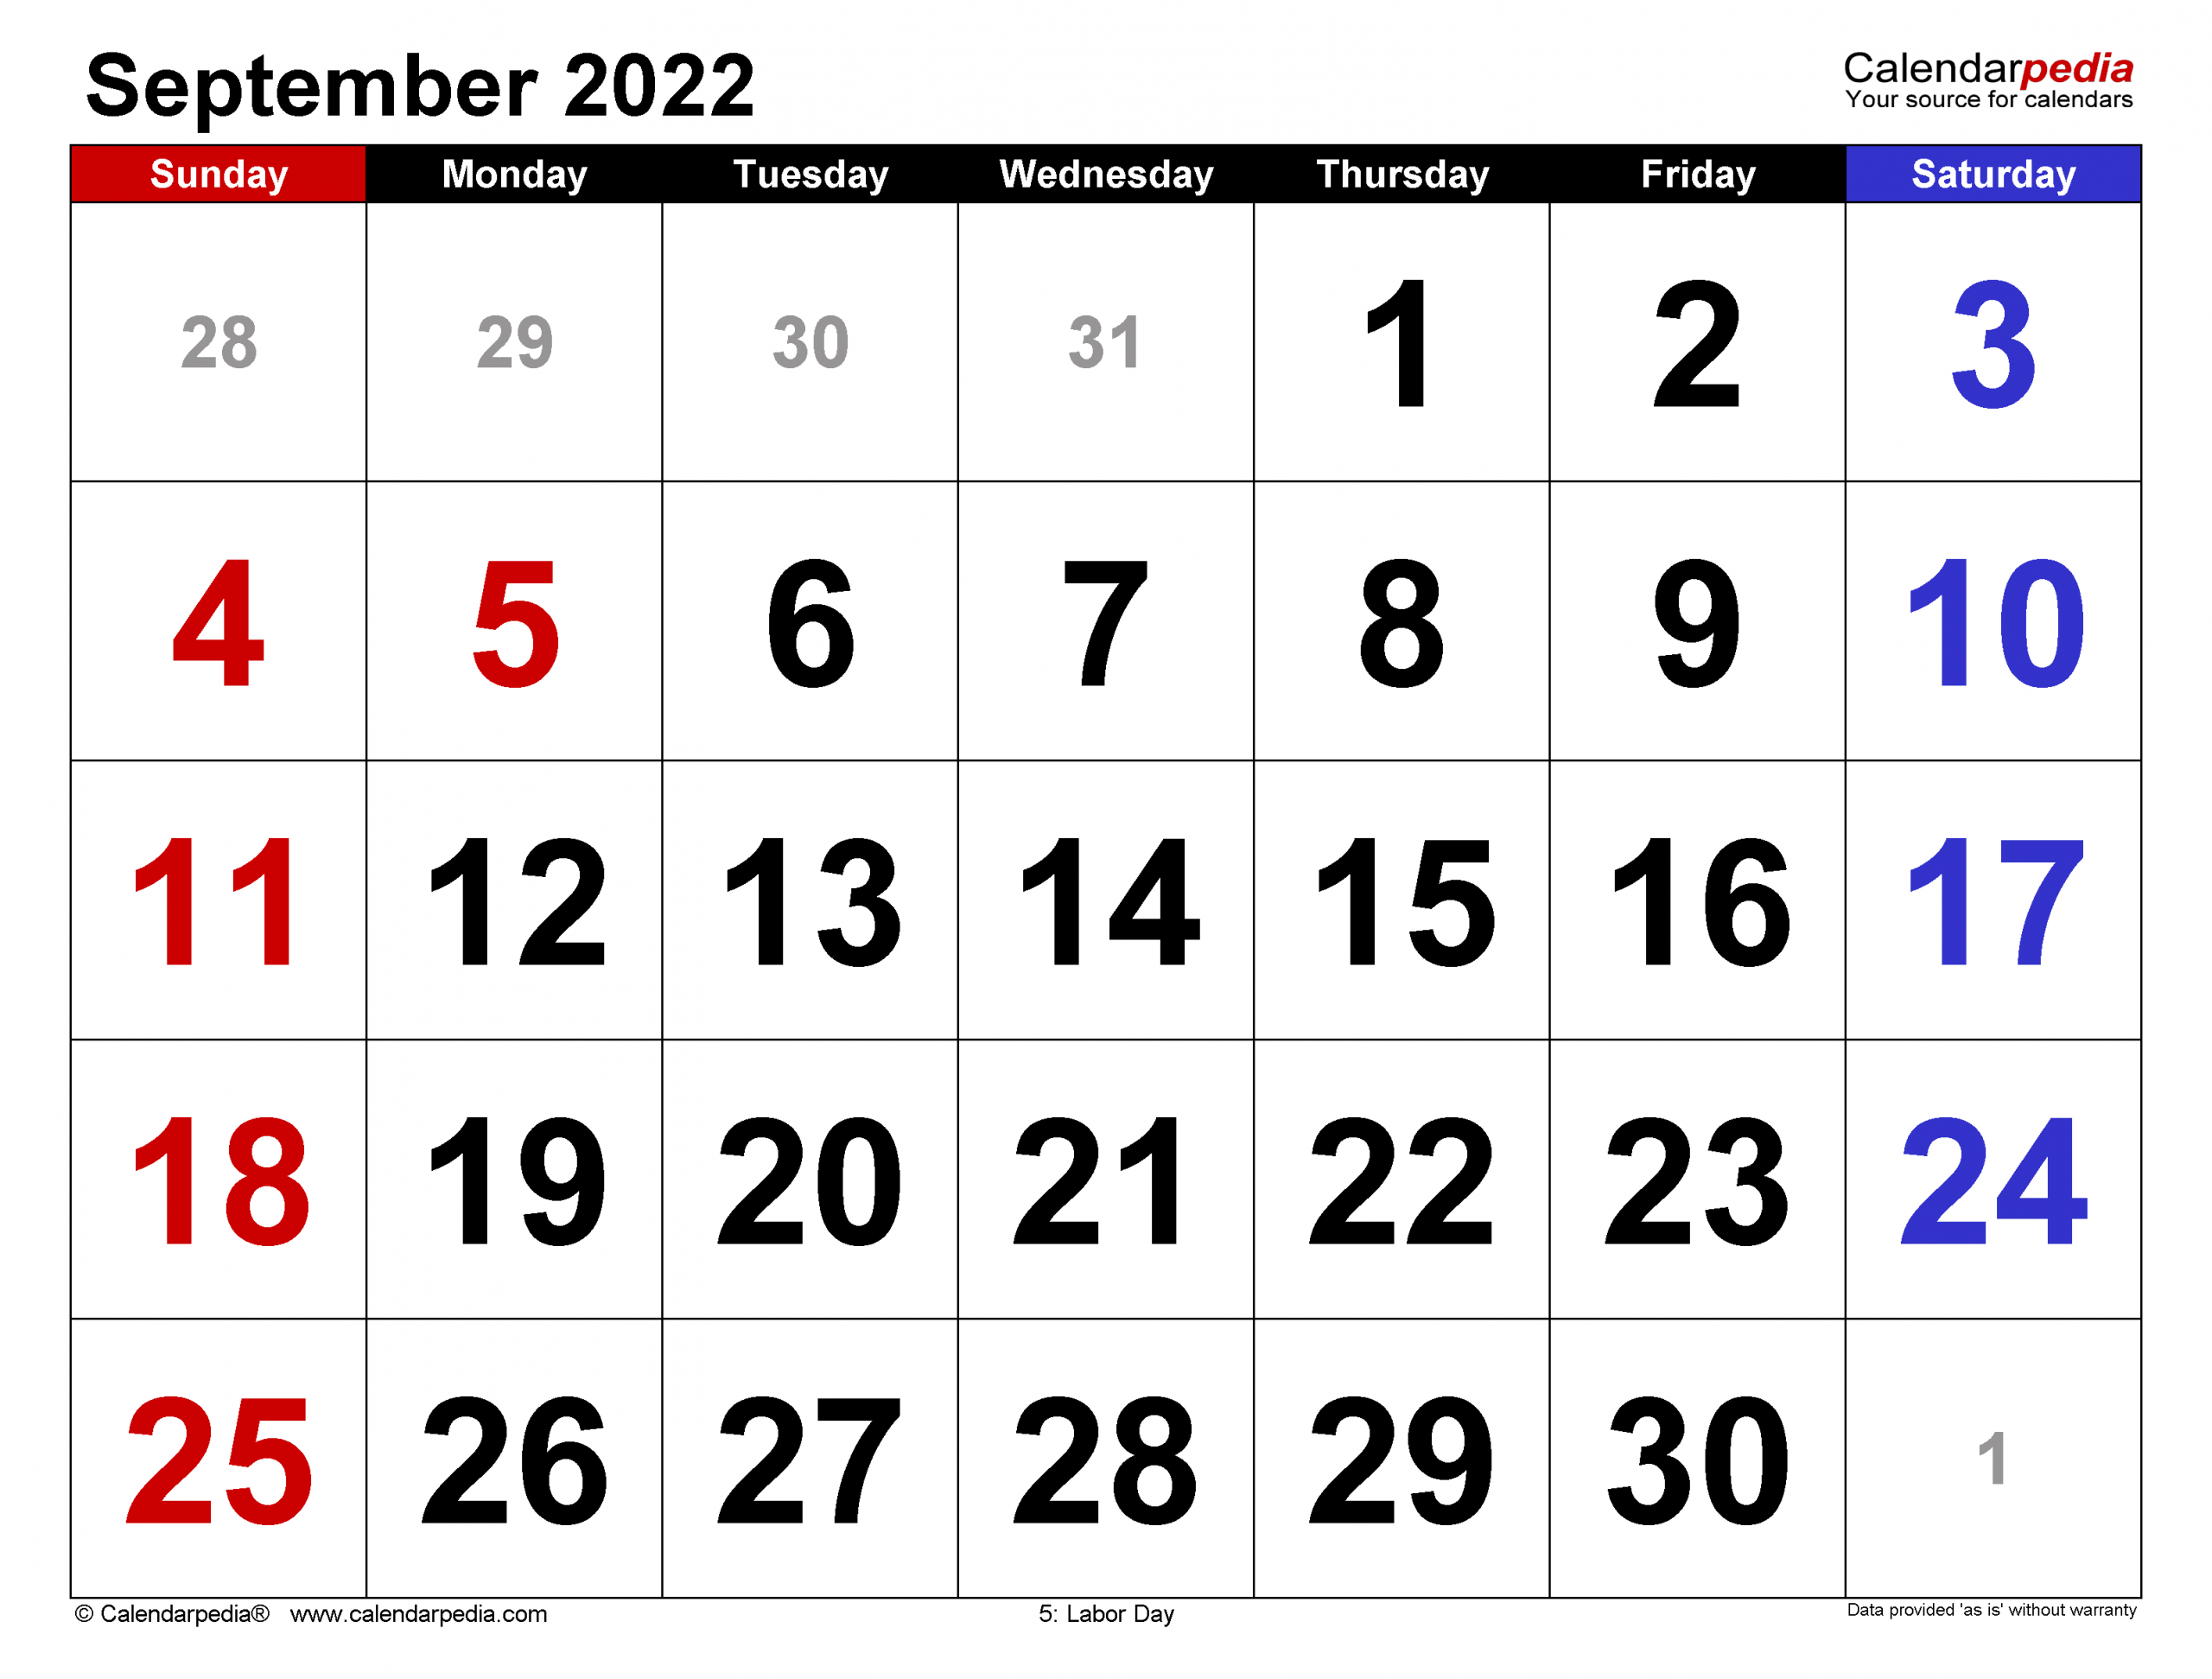 September 2022 Calendar Fun Facts